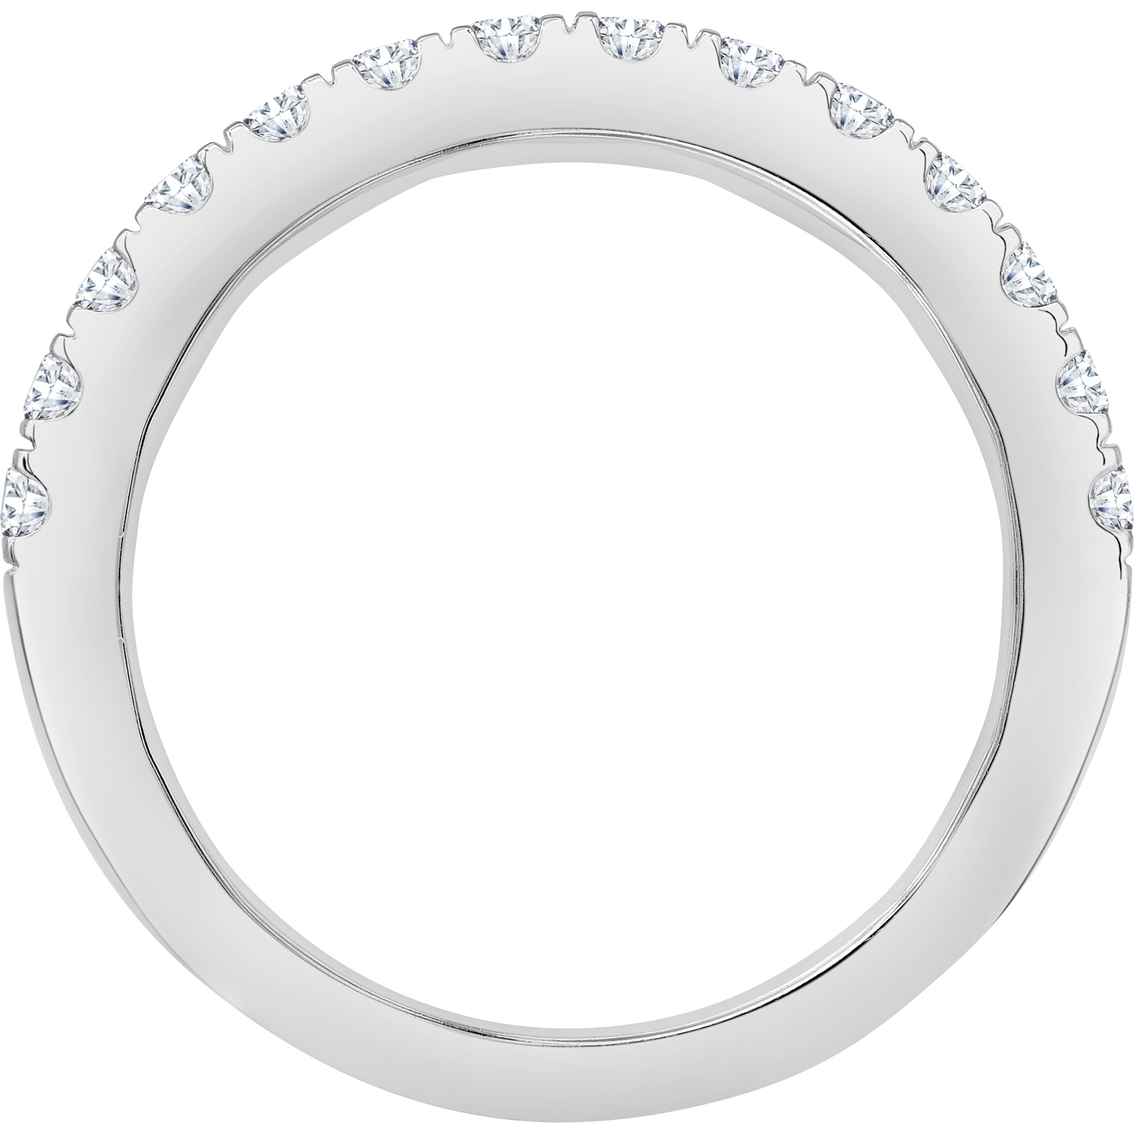 Badgley Mischka 14K White Gold 1/2 CTW Lab Grown Diamond Anniversary Ring Size 7 - Image 3 of 3